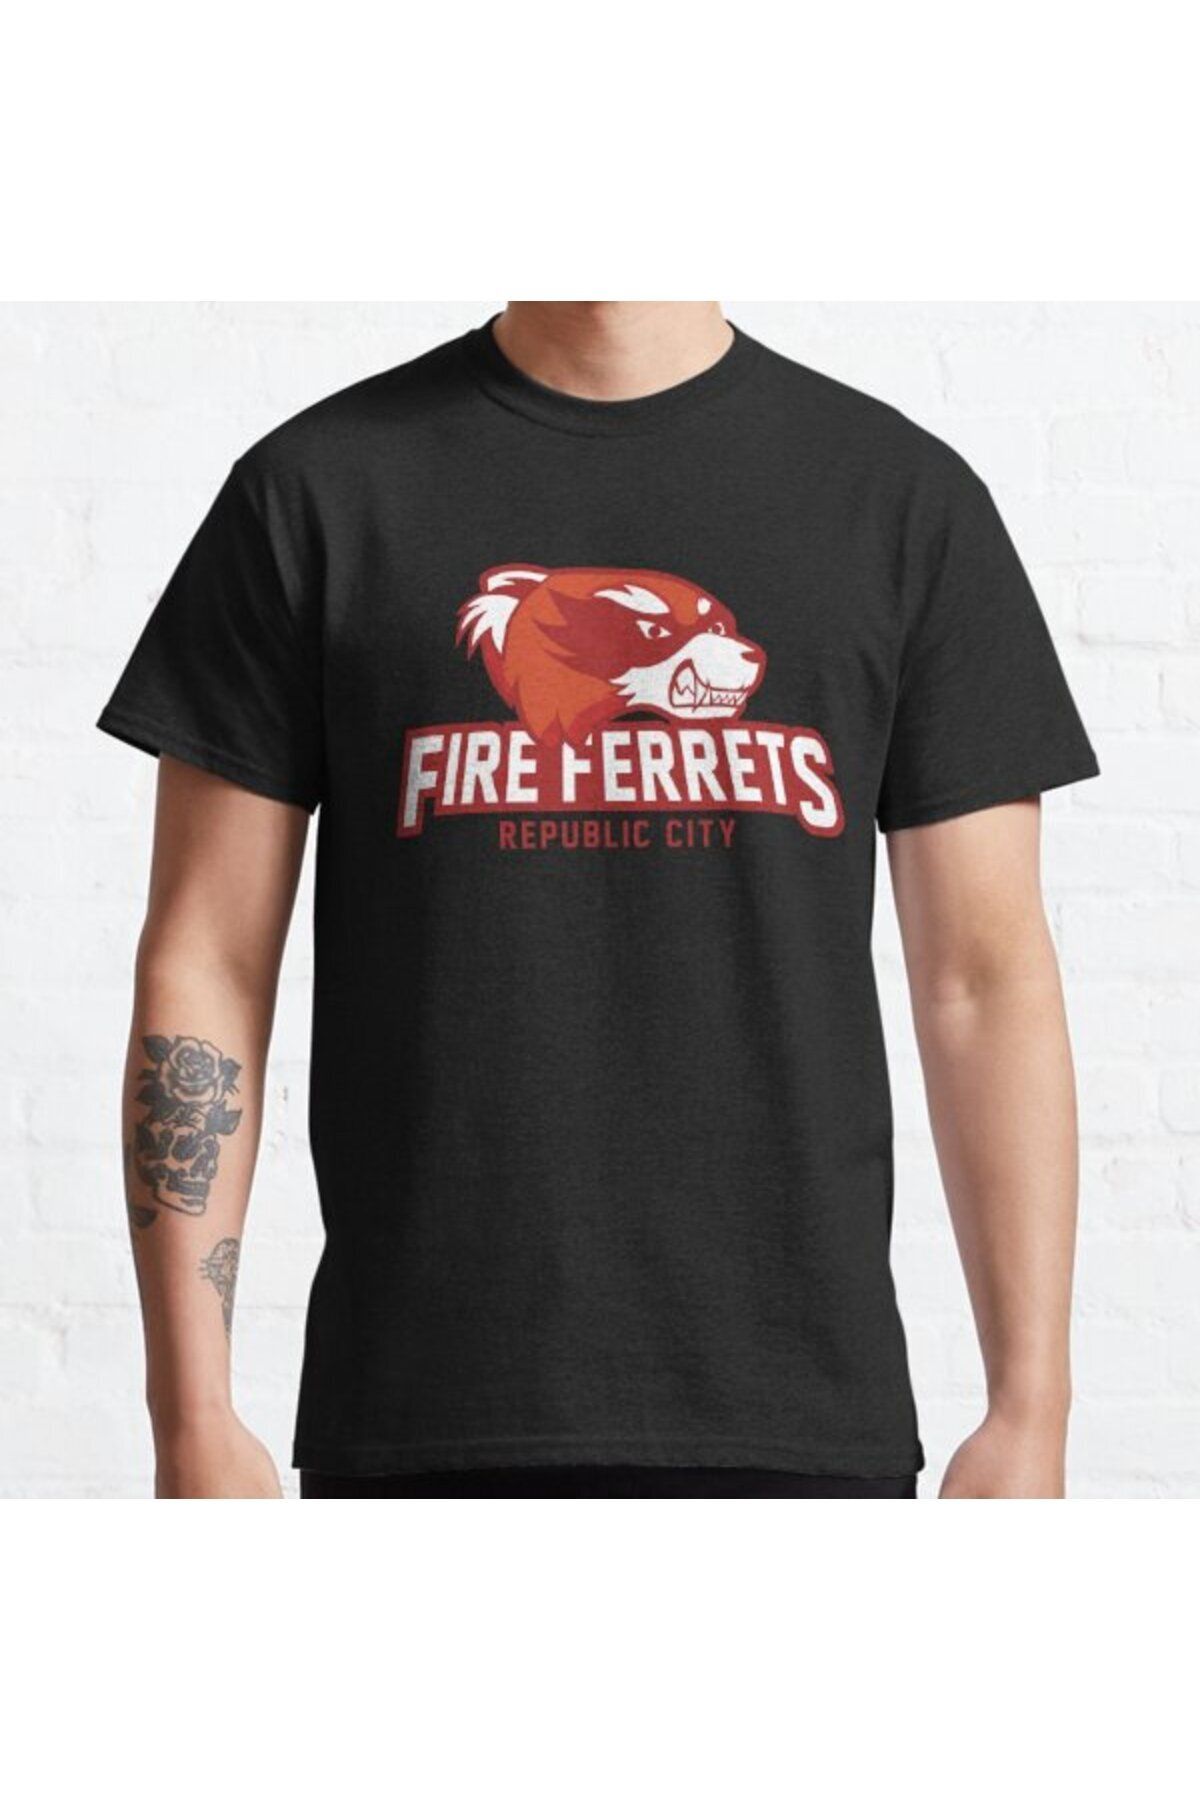 ZOKAWEAR Bol Kalıp Unisex Republic City Fire Ferrets Tasarım Baskılı Tshirt